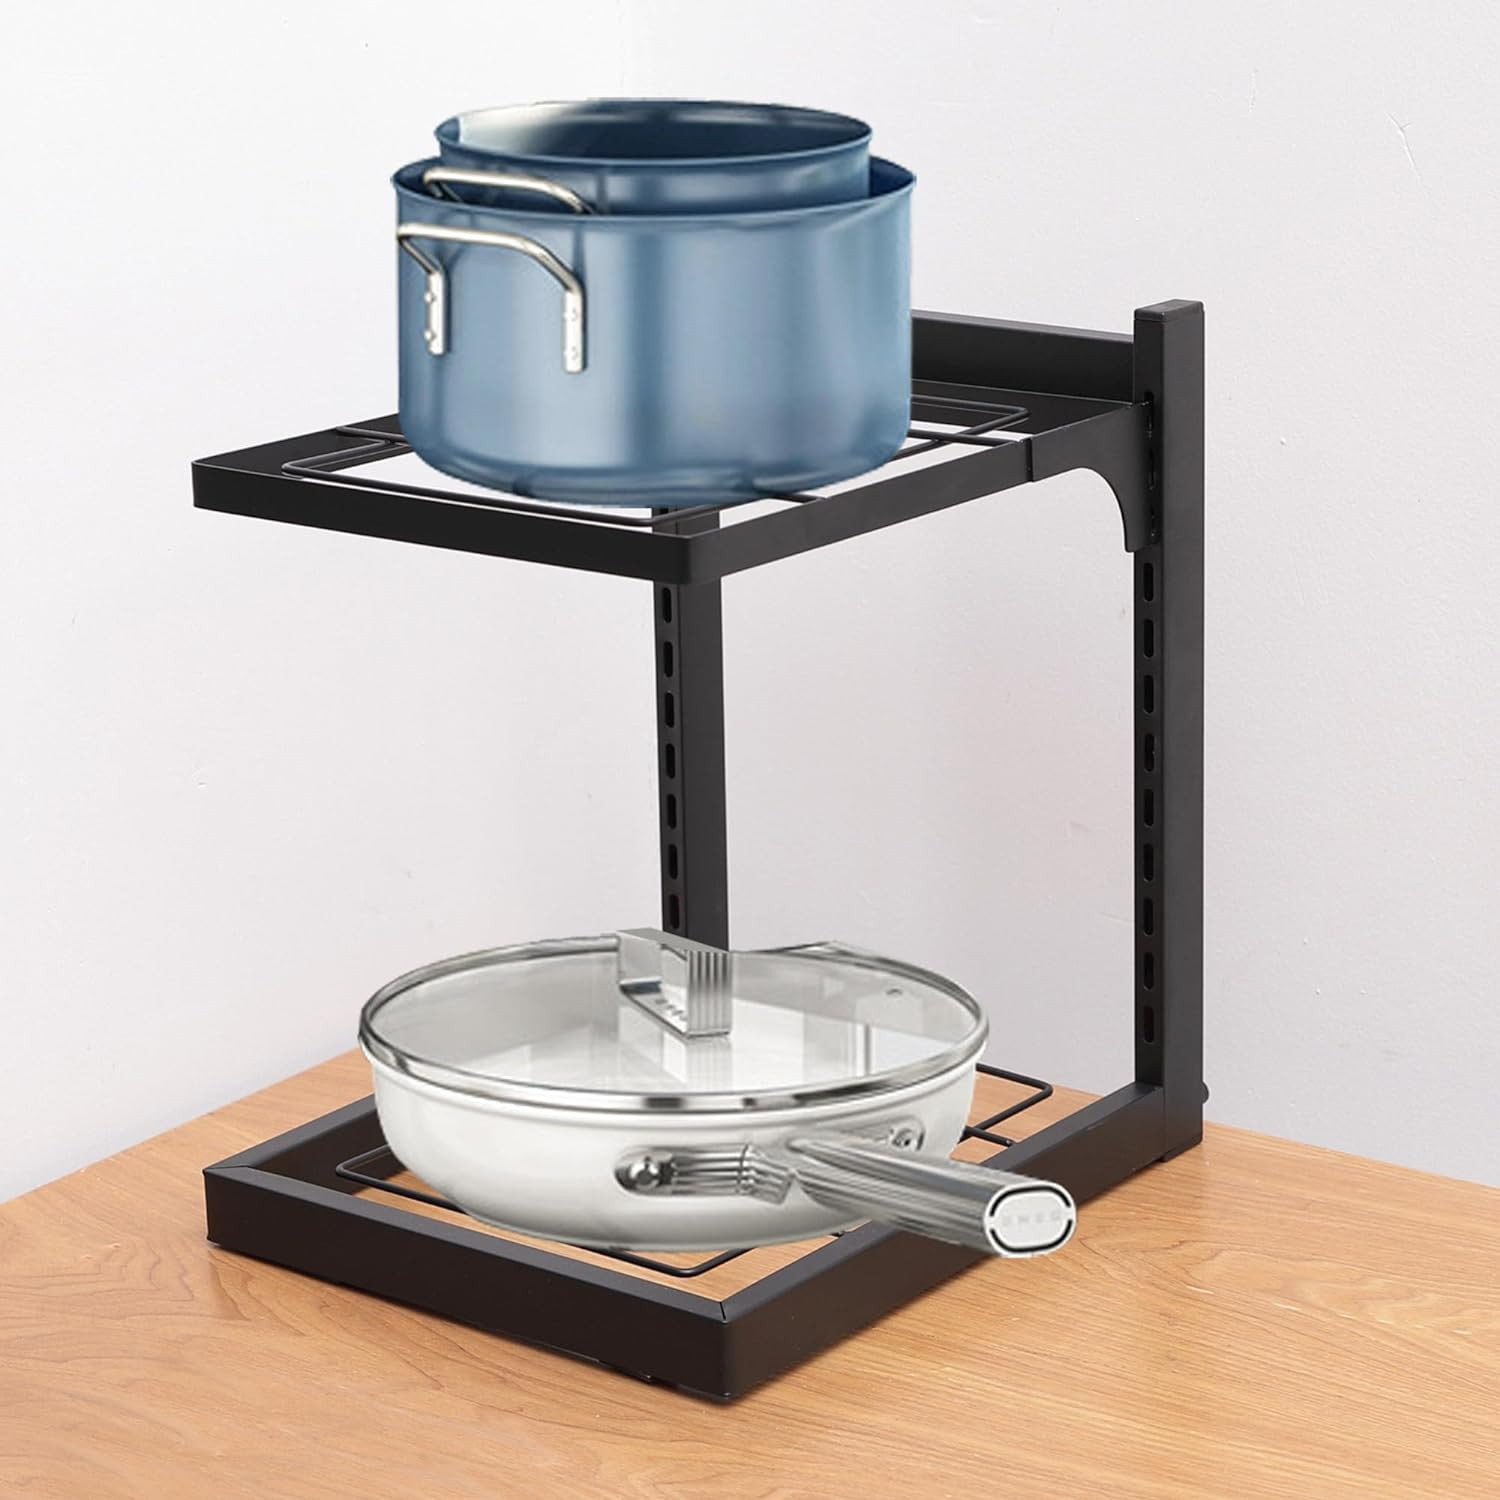 Kuber Industries 2-Layer Pots and Pans Organiser Rack|Kitchen Organization And Storage|Adjustable Pot Lid Holder Rack|Home Kitchen Accessories (Black)